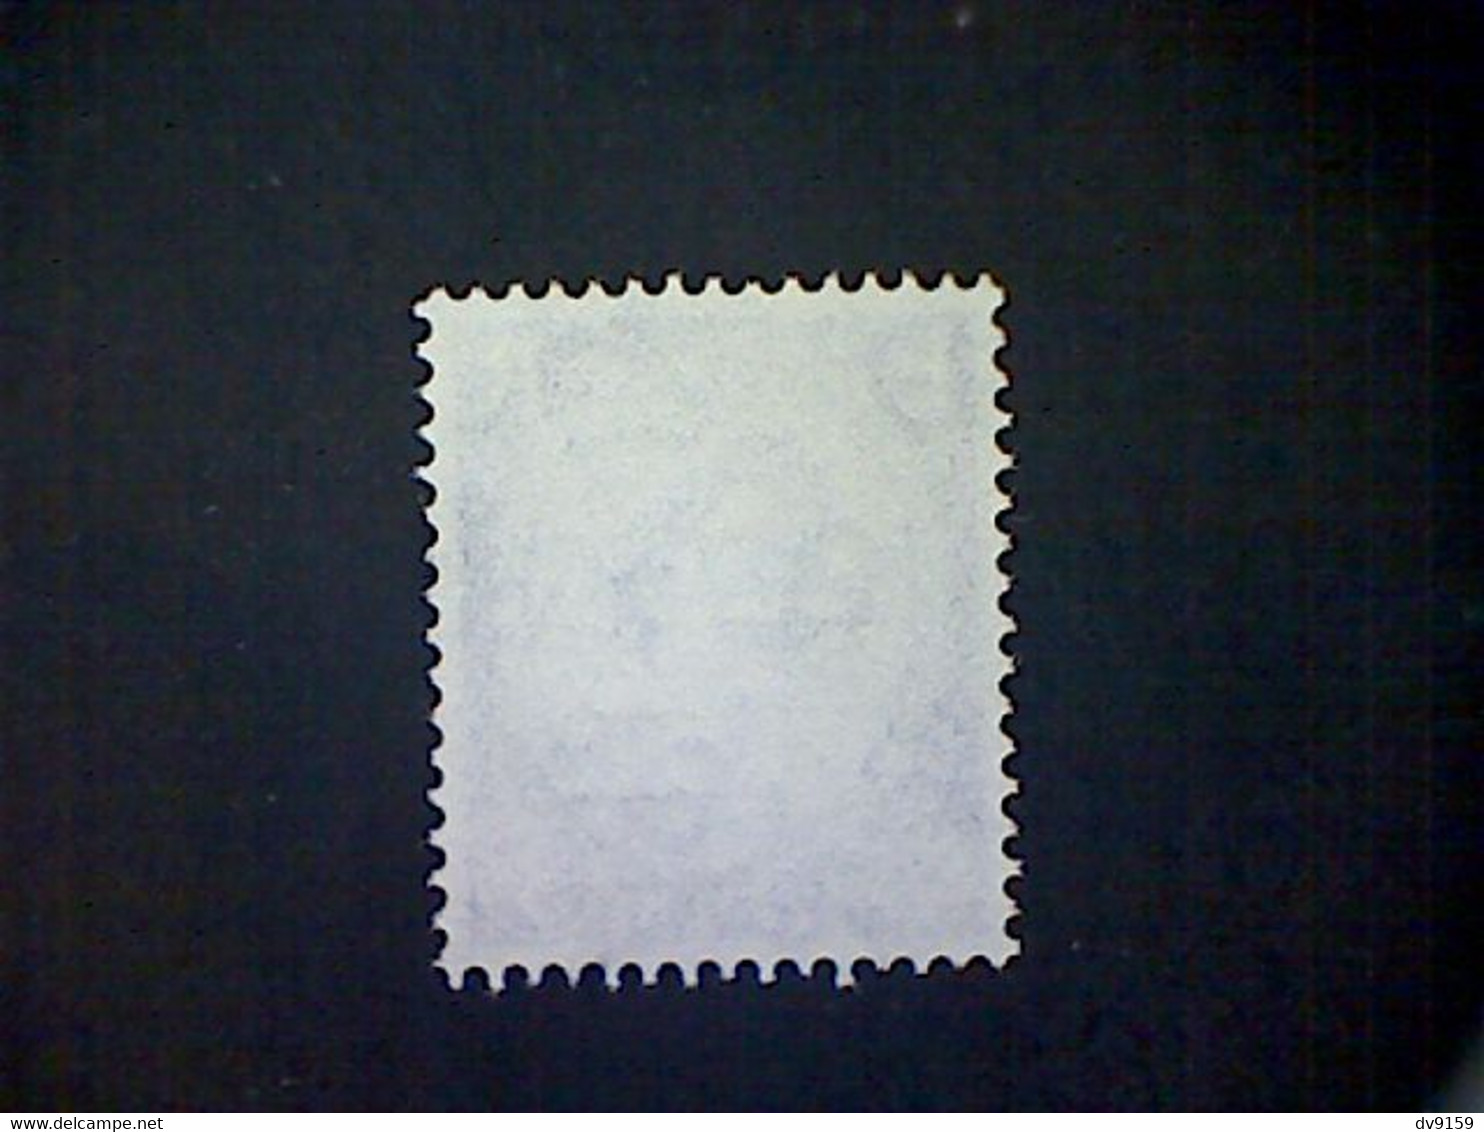 Great Britain, Scott #358, Used(o), 1958, Wilding: Queen Elizabeth II, 3d, Deep Purple - Used Stamps